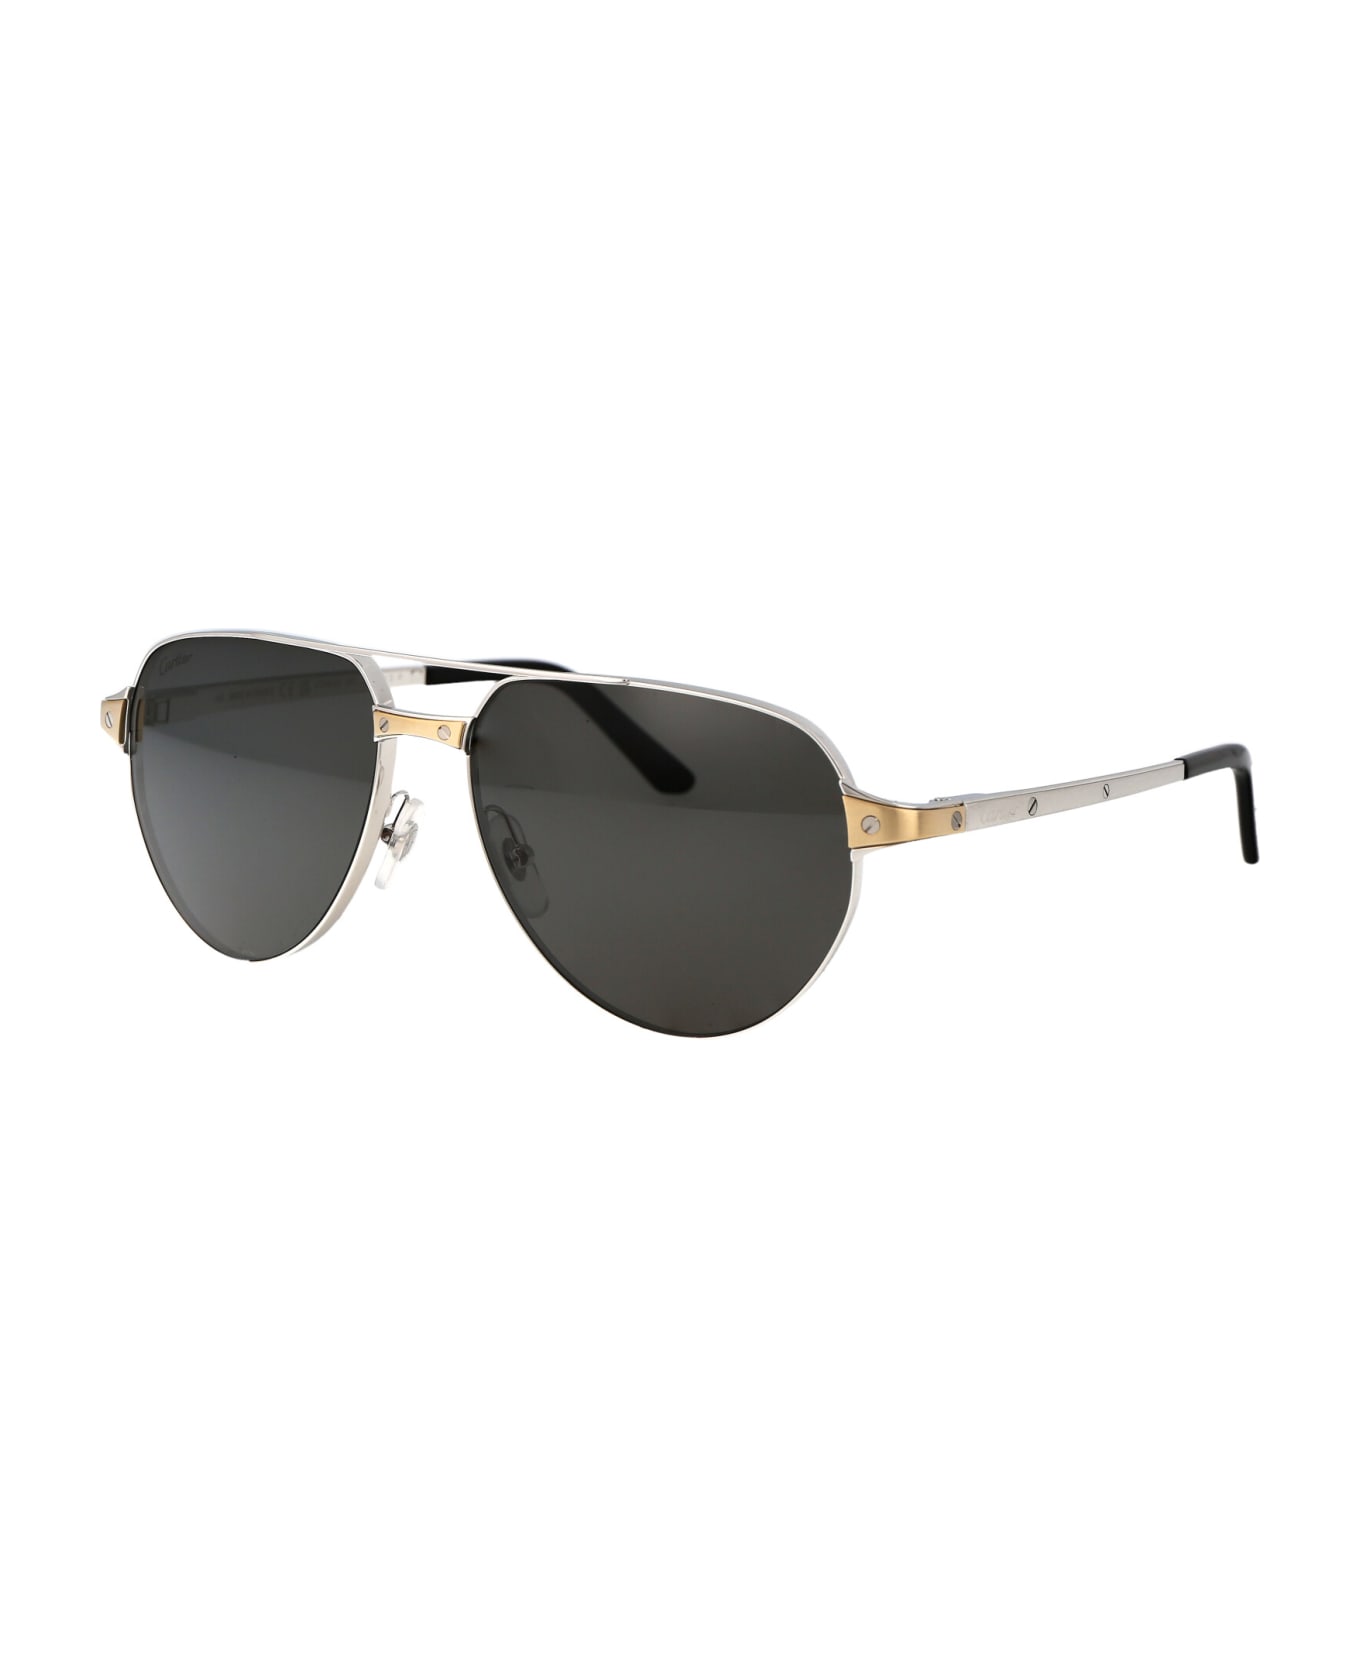 Cartier Eyewear Ct0425s Sunglasses - 001 SILVER SILVER SMOKE サングラス